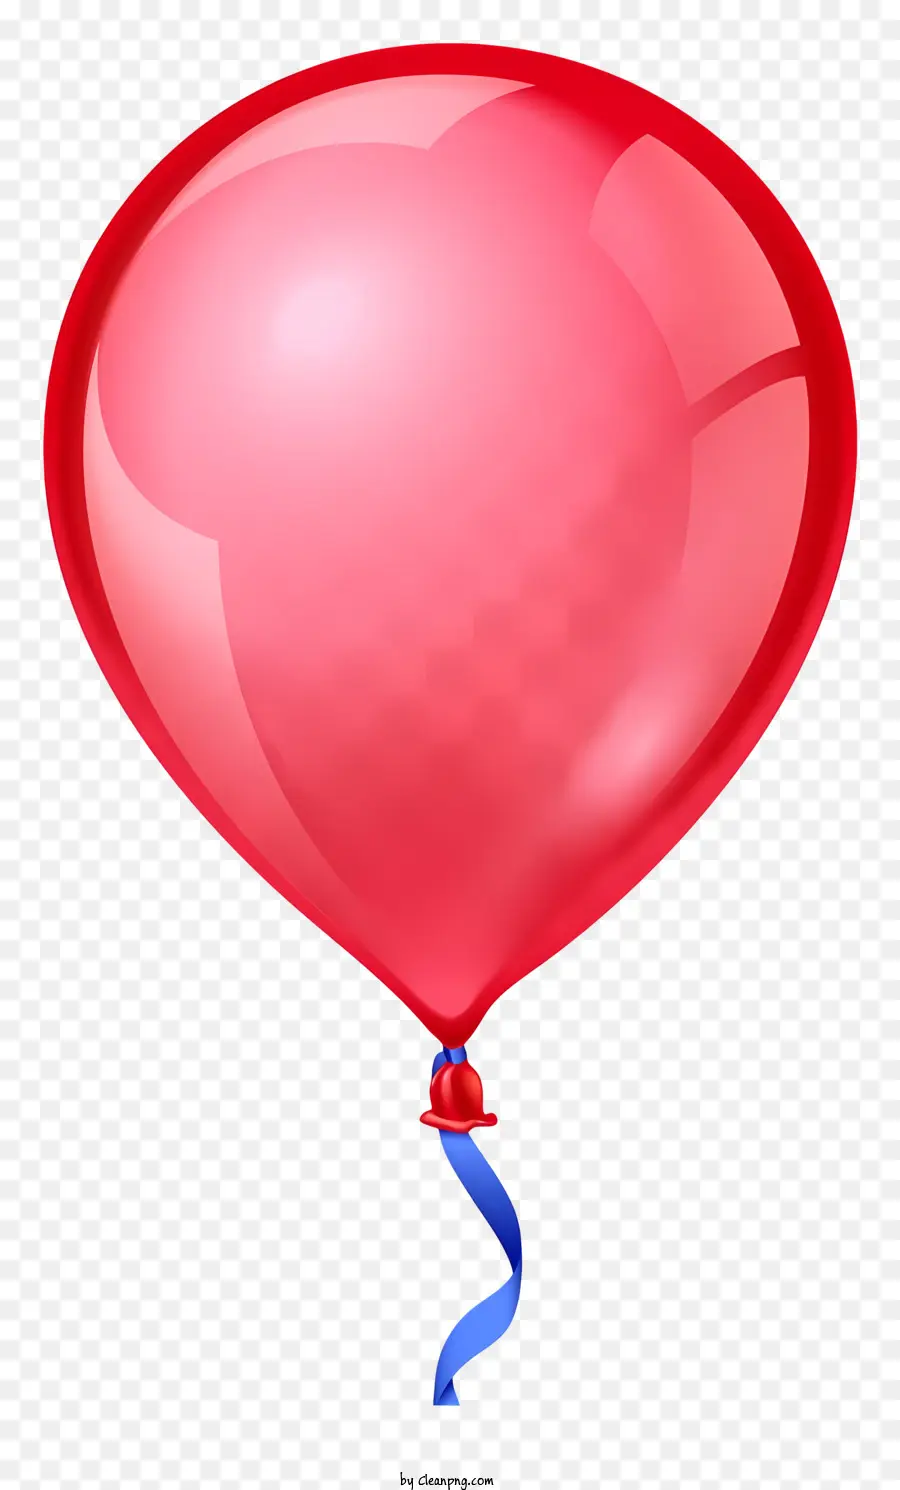 Roter Ballon - Roter Ballon mit blauem Band, transparentem Material, Schnur